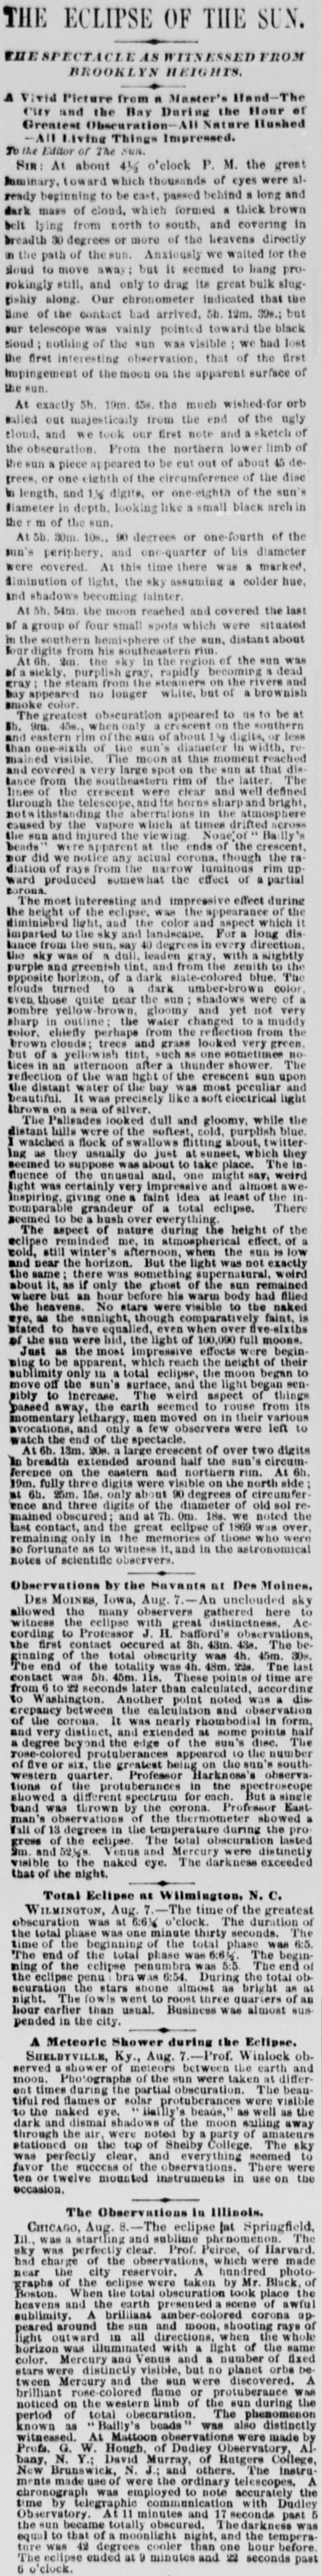 New York Sun - August 9, 1869